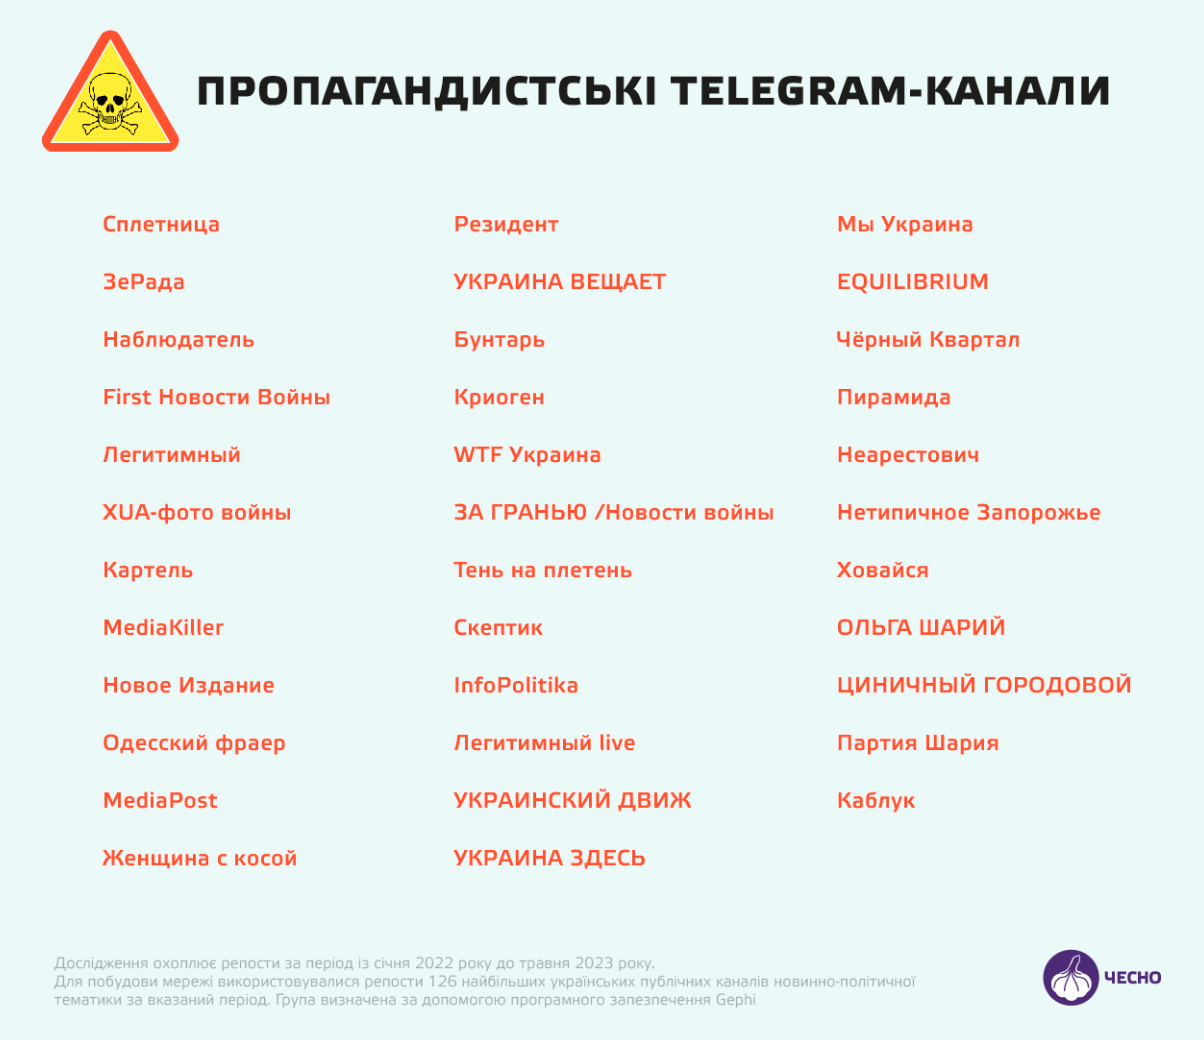 The list of Telegram channels that spread Russian propaganda